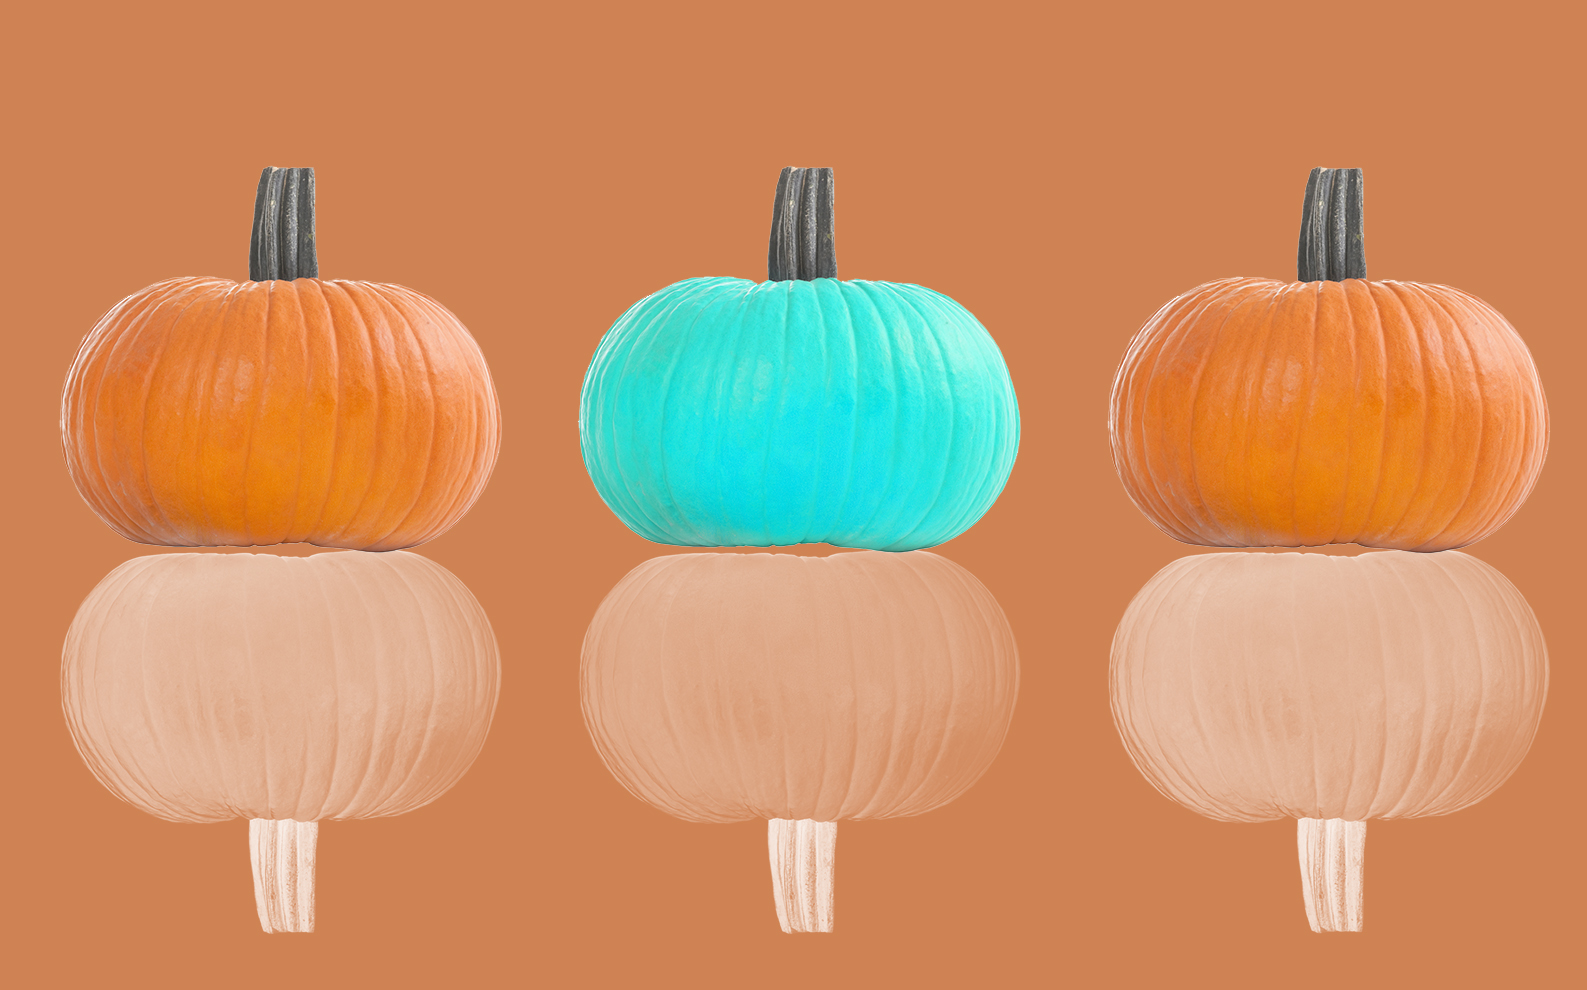 A teal-colored pumpkin represents food allergy awareness among all the orange pumpkins.